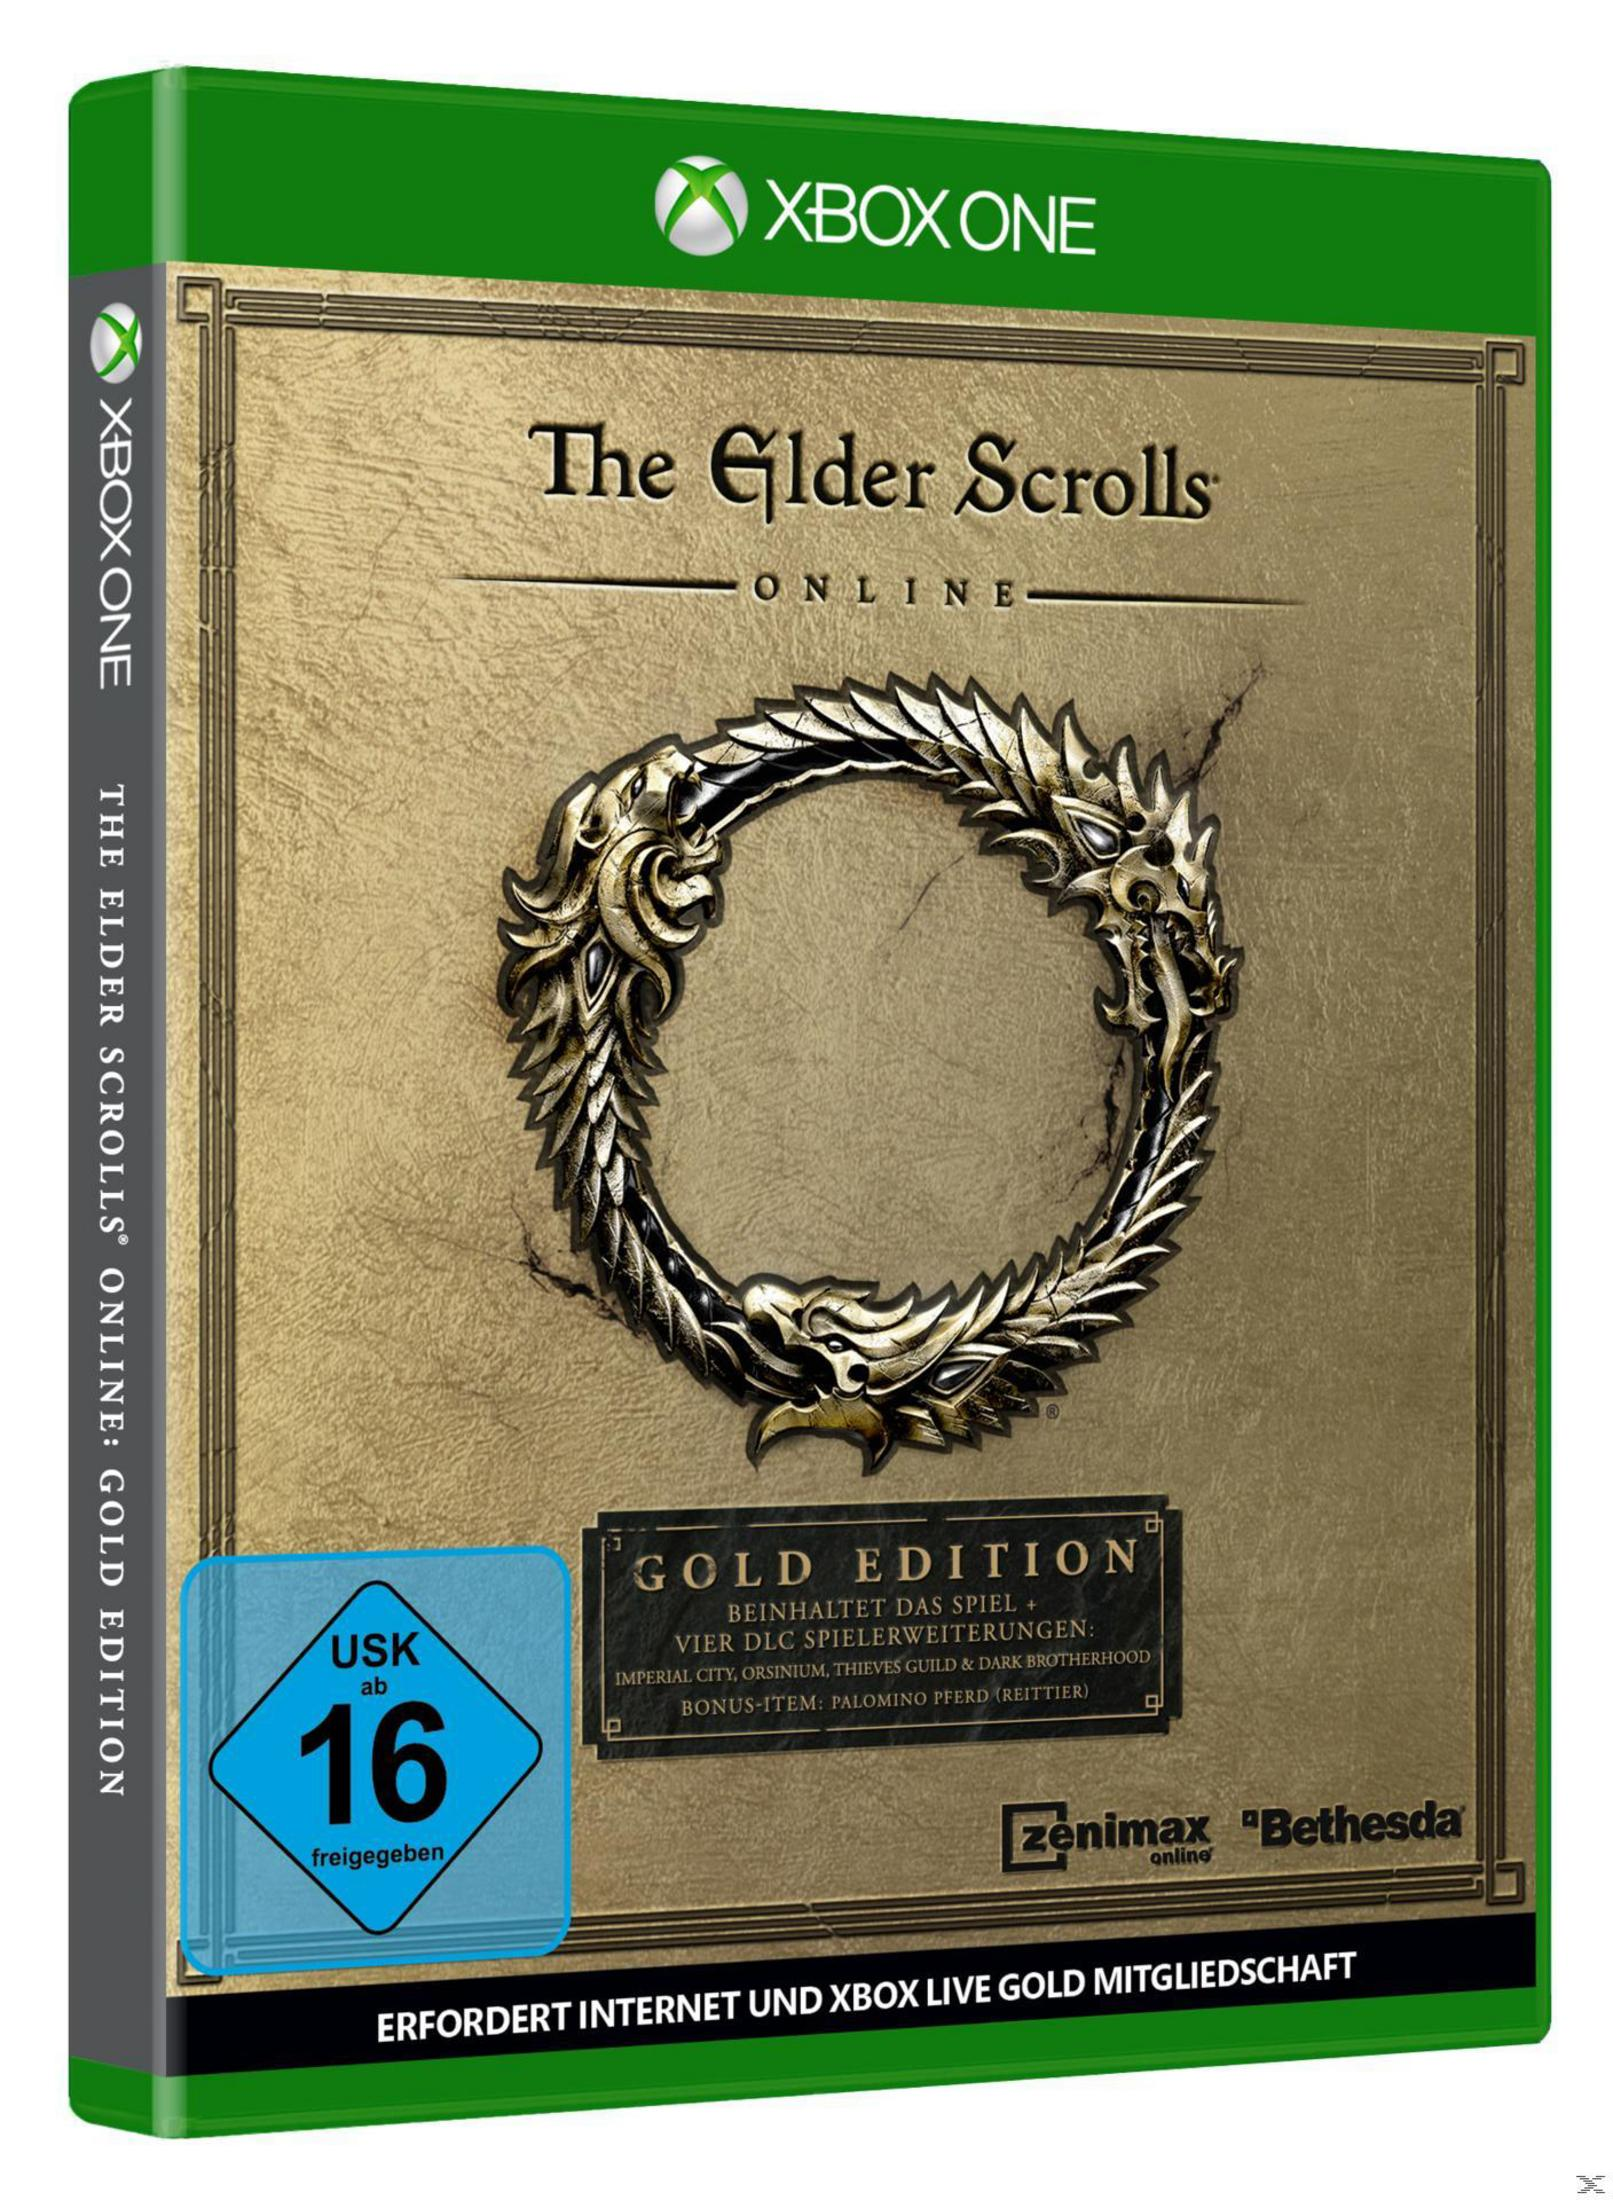 The Elder Scrolls One] Online Gold - [Xbox - Edition